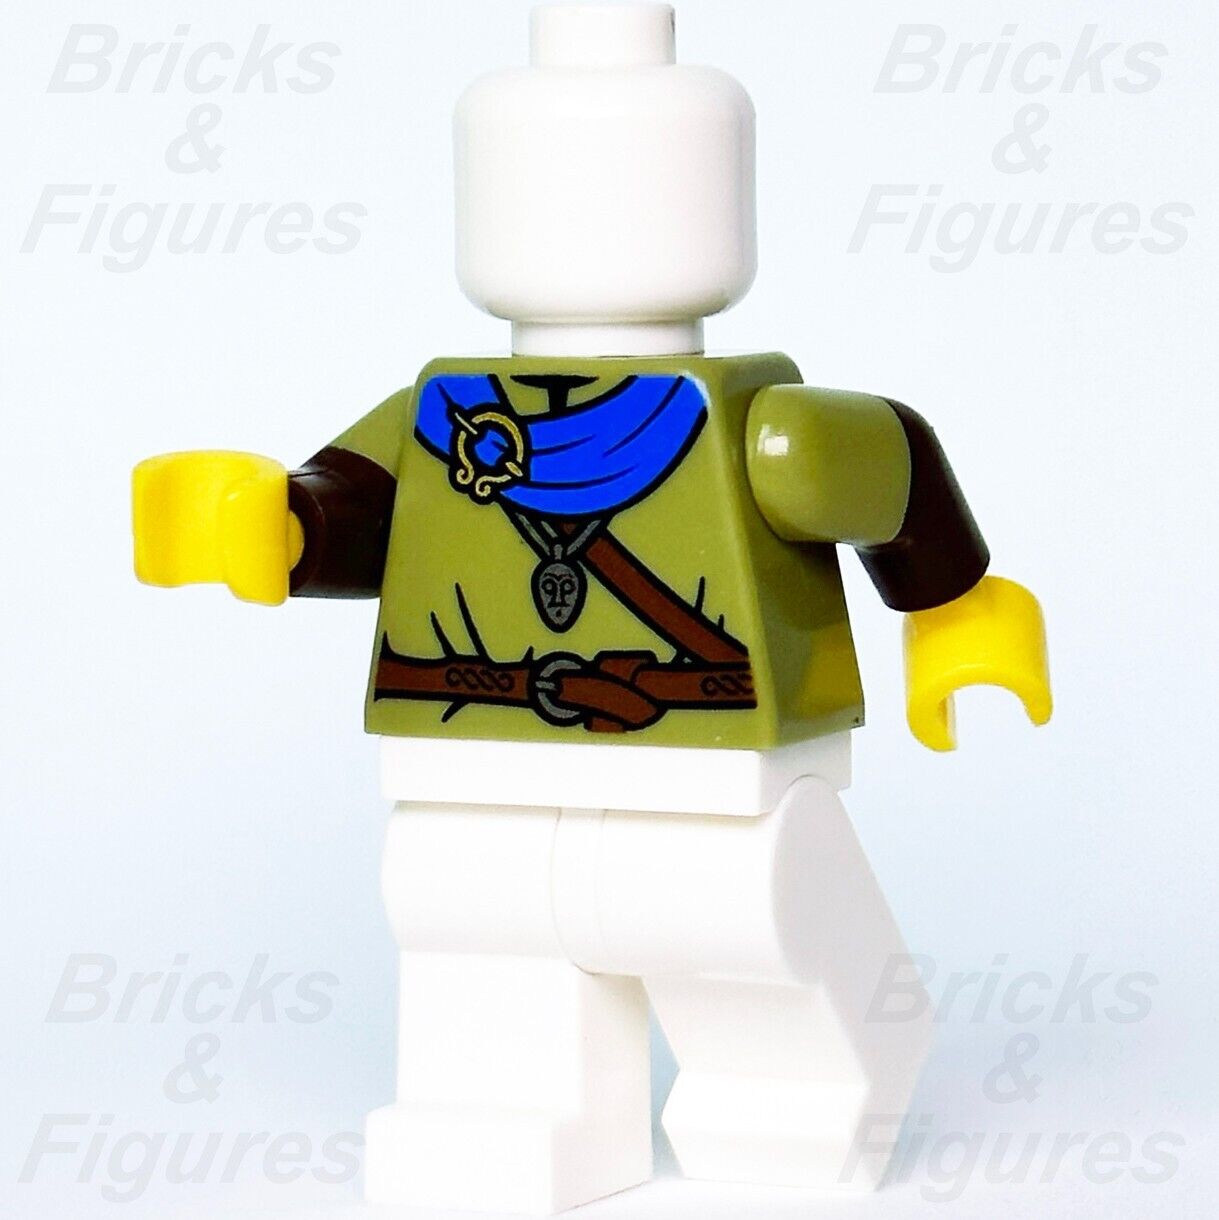 LEGO Viking Torso Minifigure Body Part 973pb3870c01 col20-8 71027 Collectible - Bricks & Figures